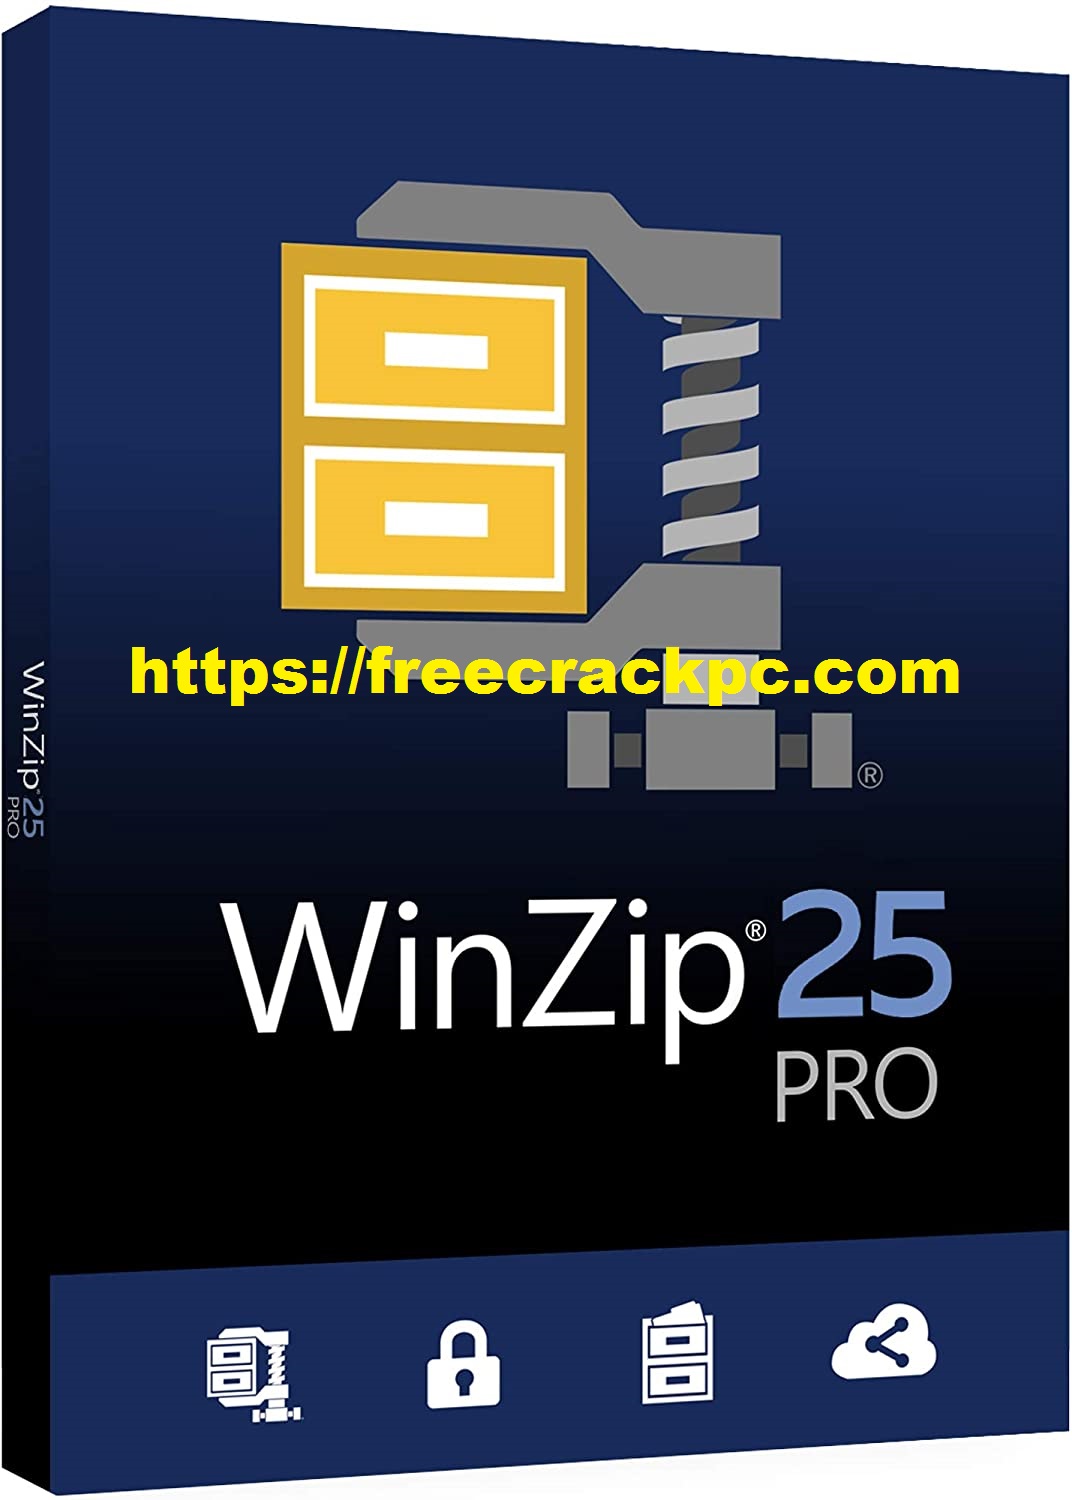 WinZip Pro Crack 25 Plus Keygen Free Download